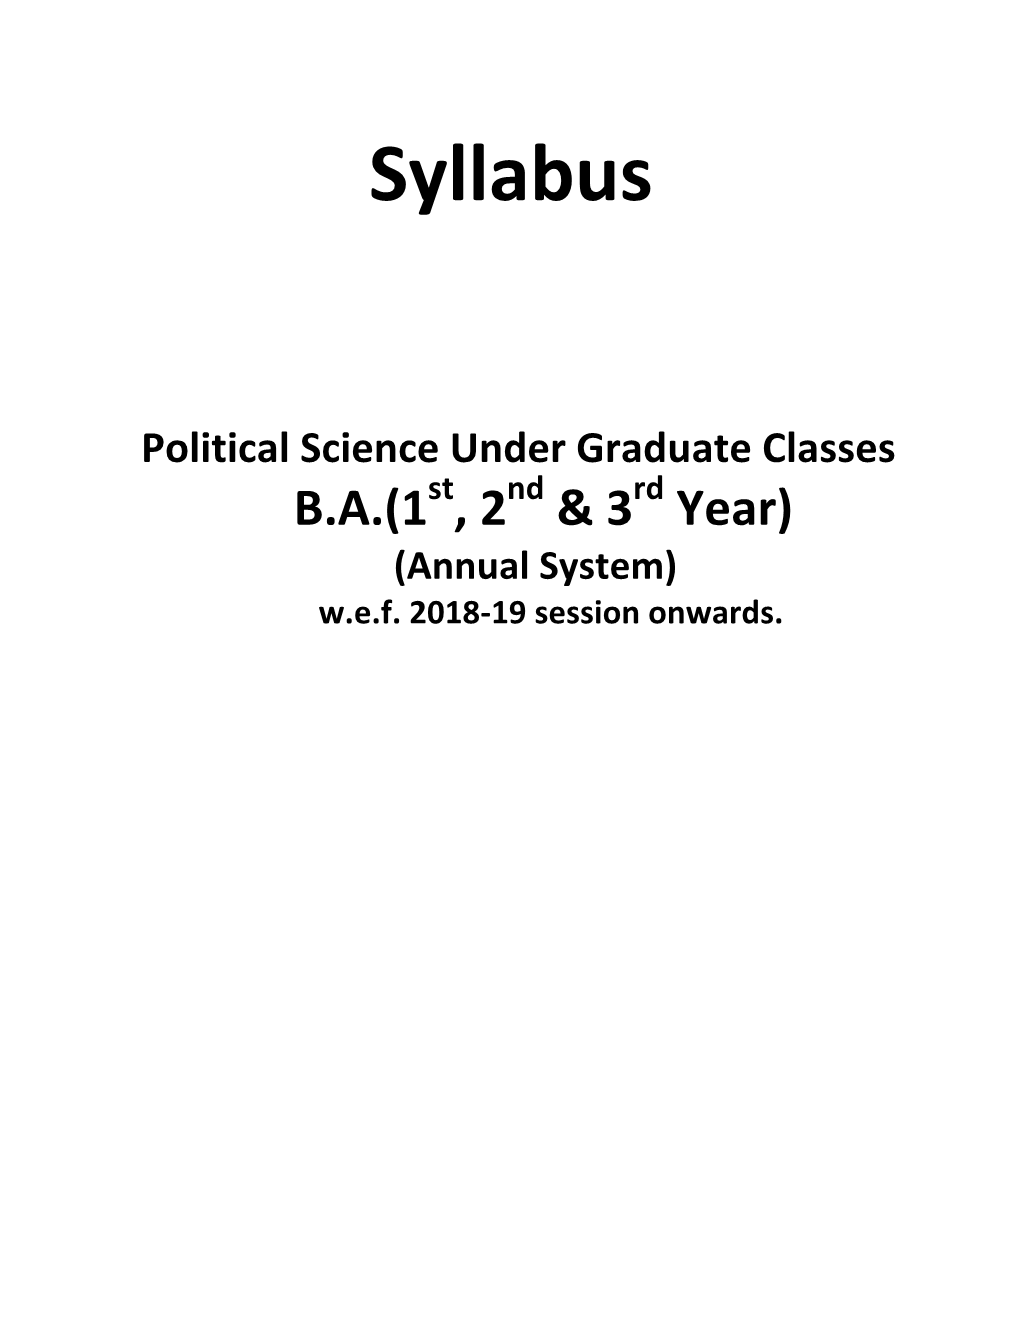 Political Science Syllabus